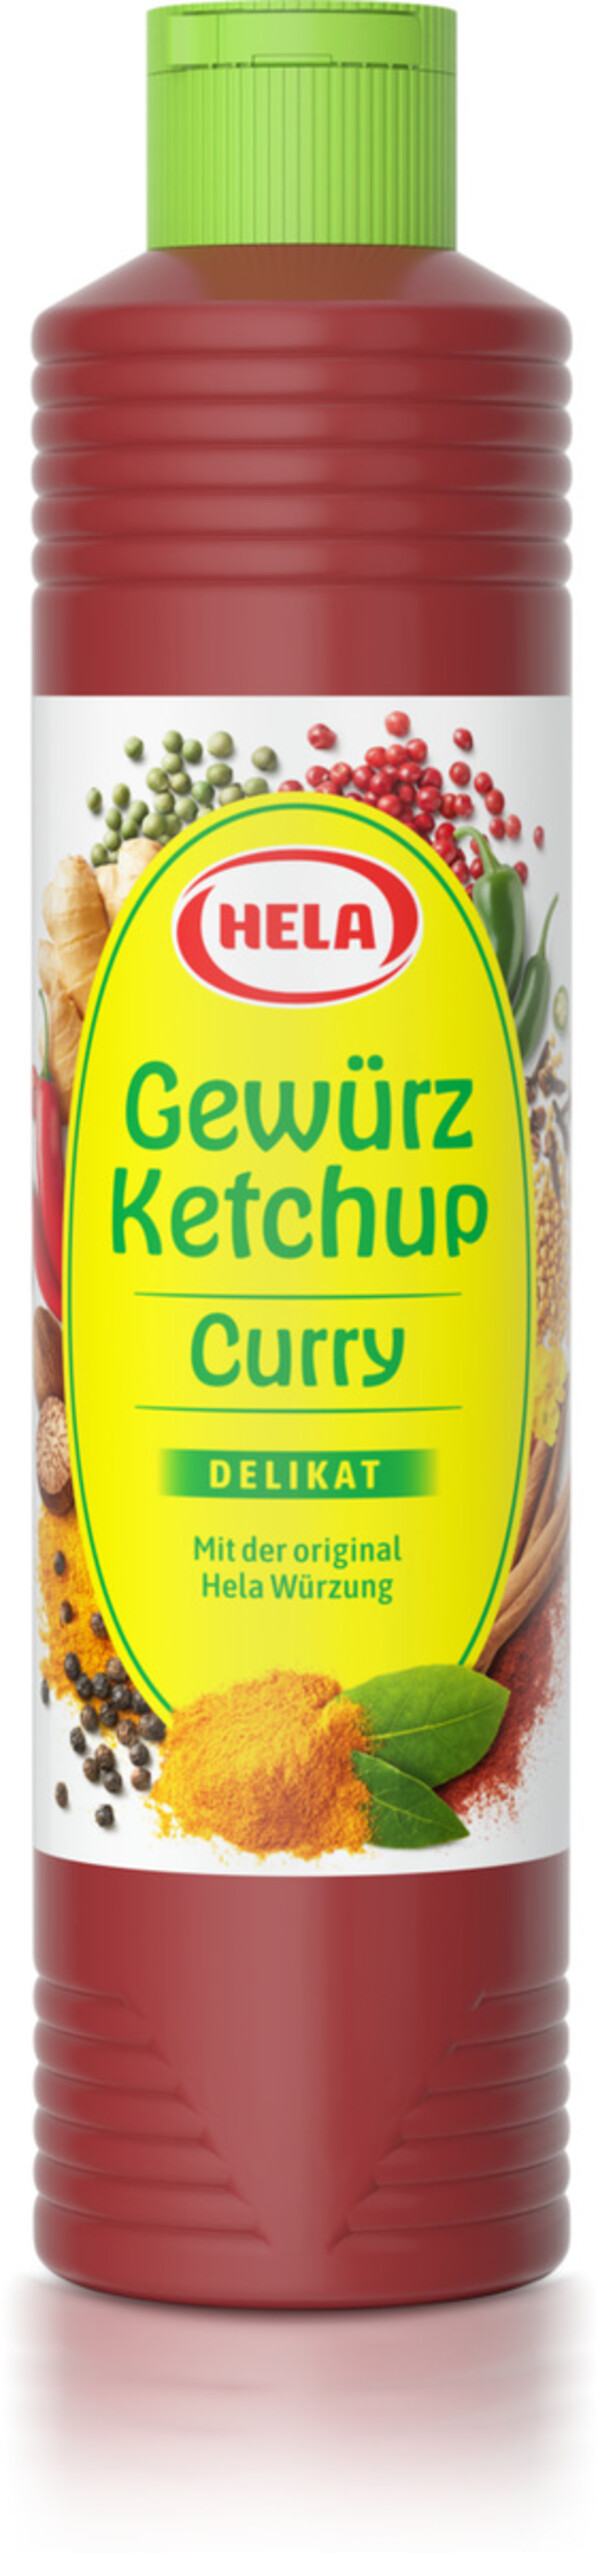 Hela Curry Gewürz Ketchup delikat 800 ml